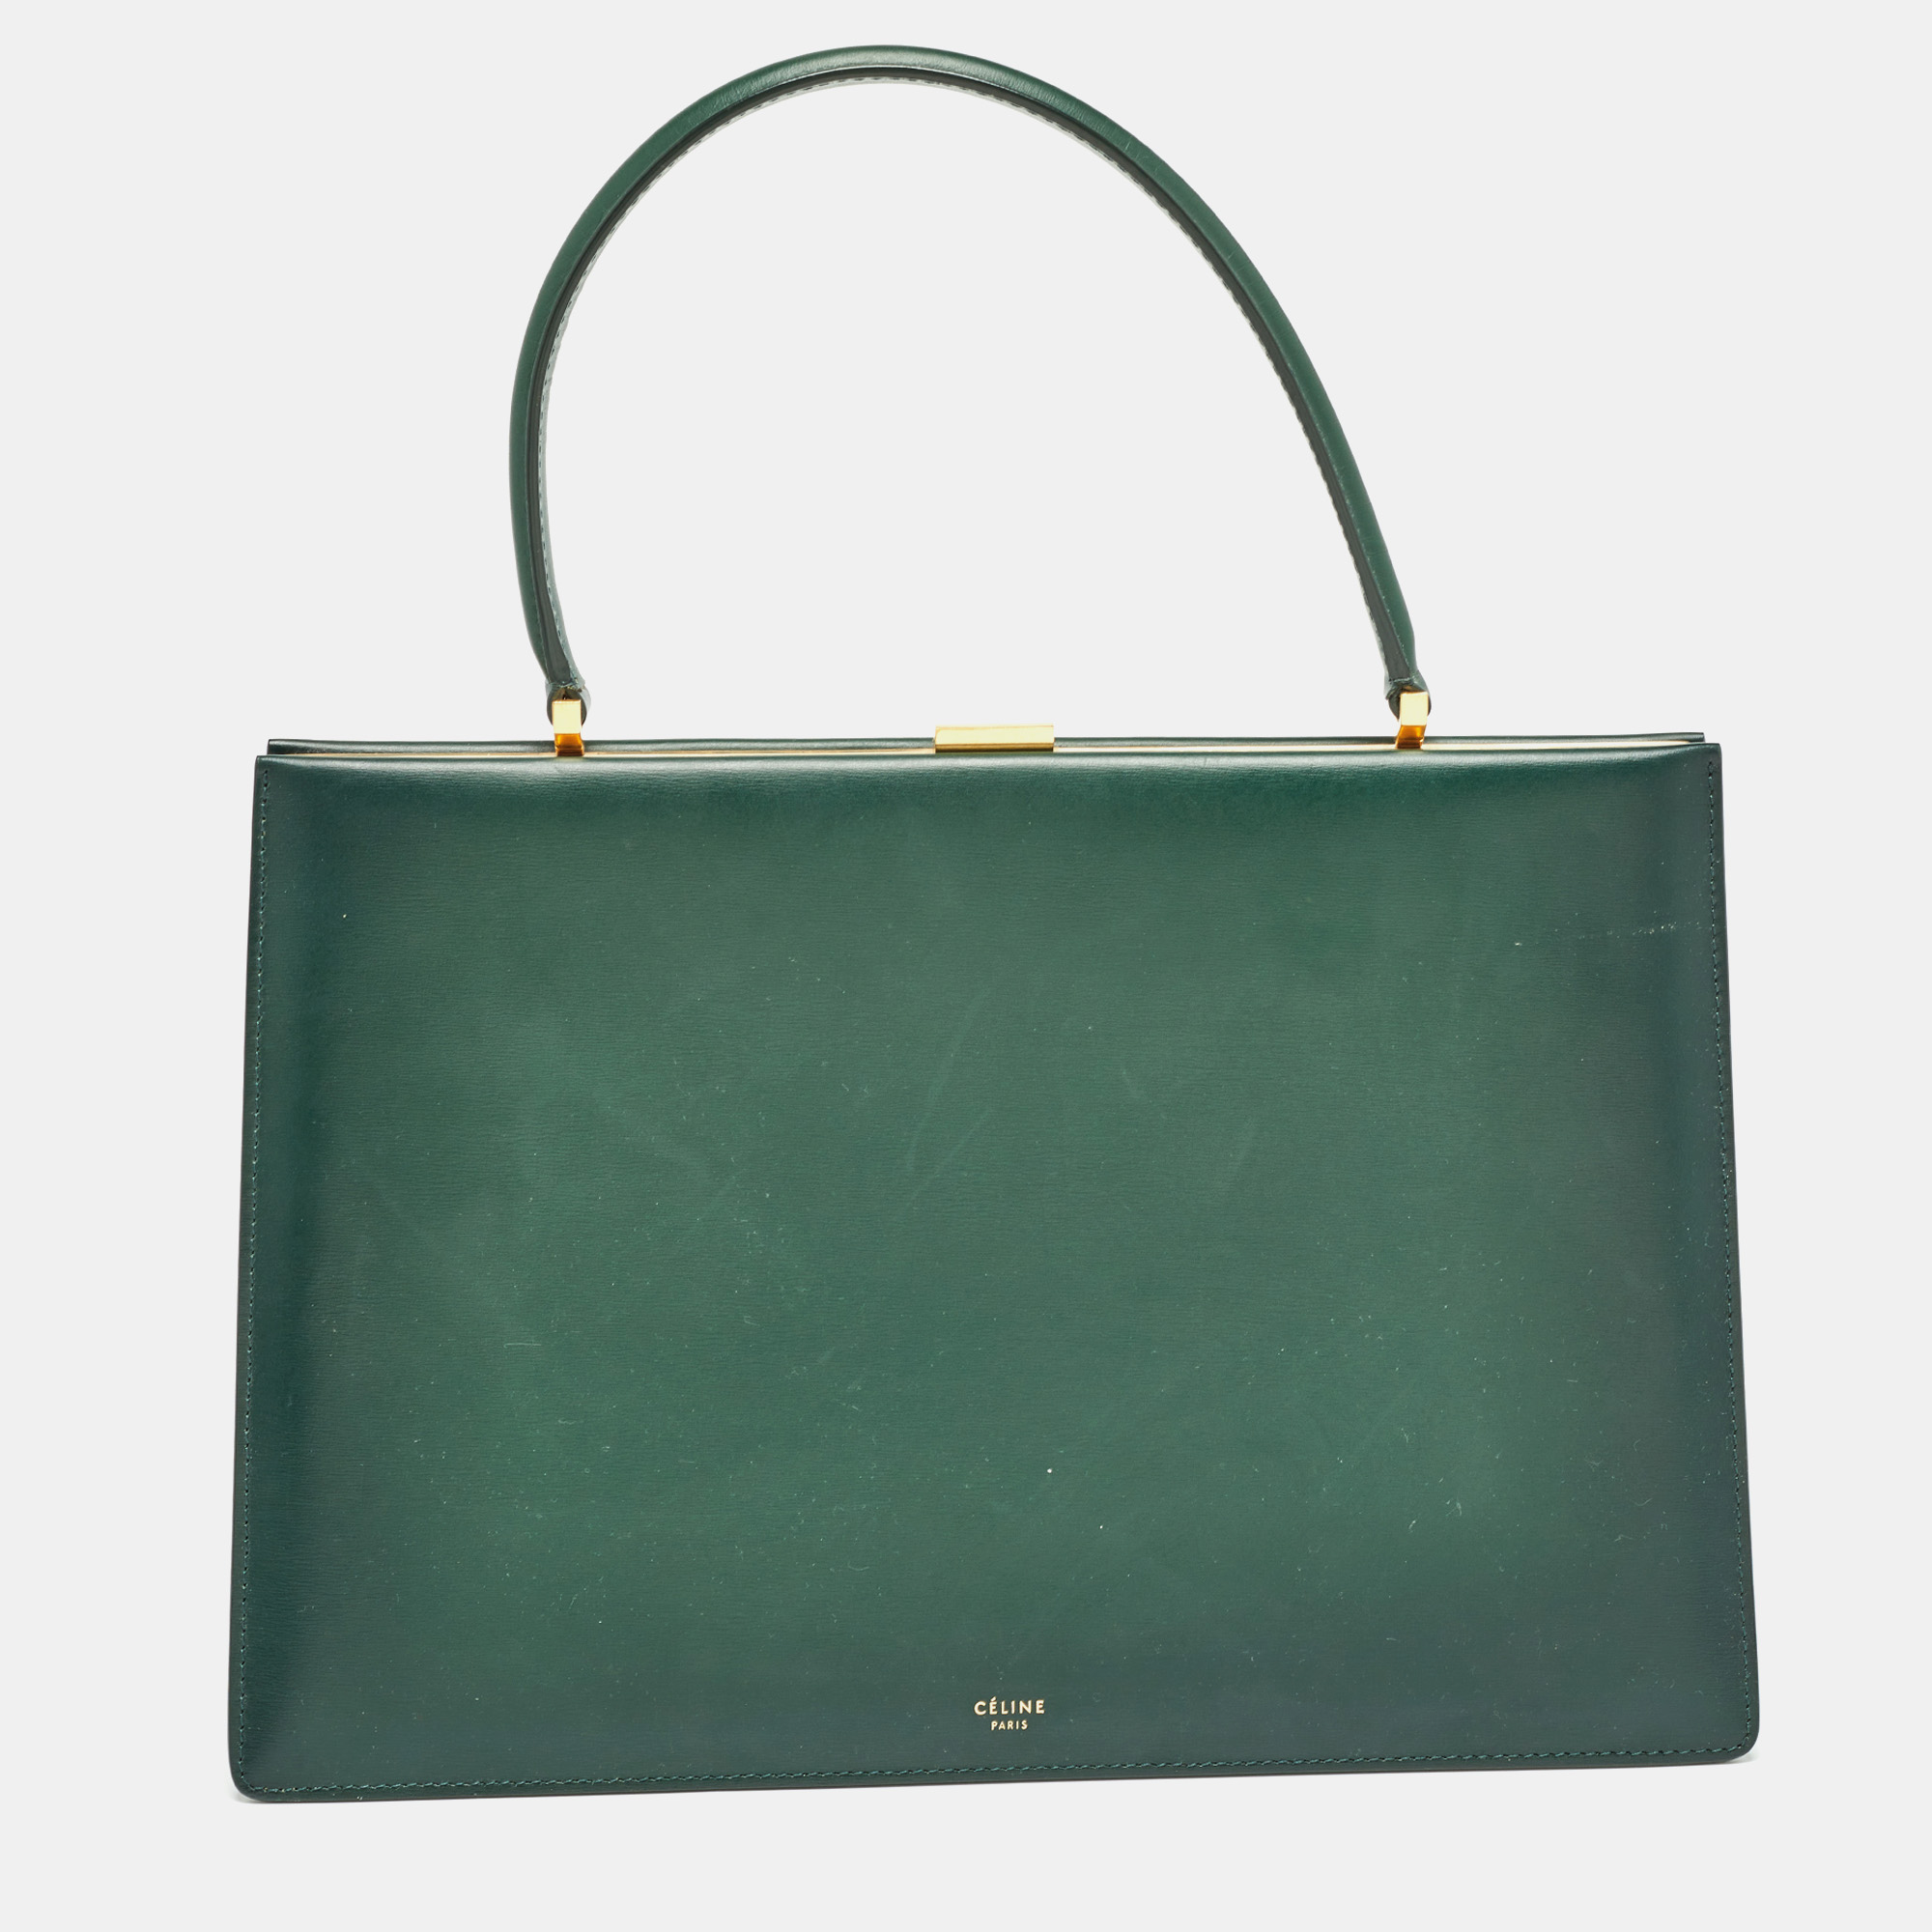 Celine green leather medium clasp top handle bag